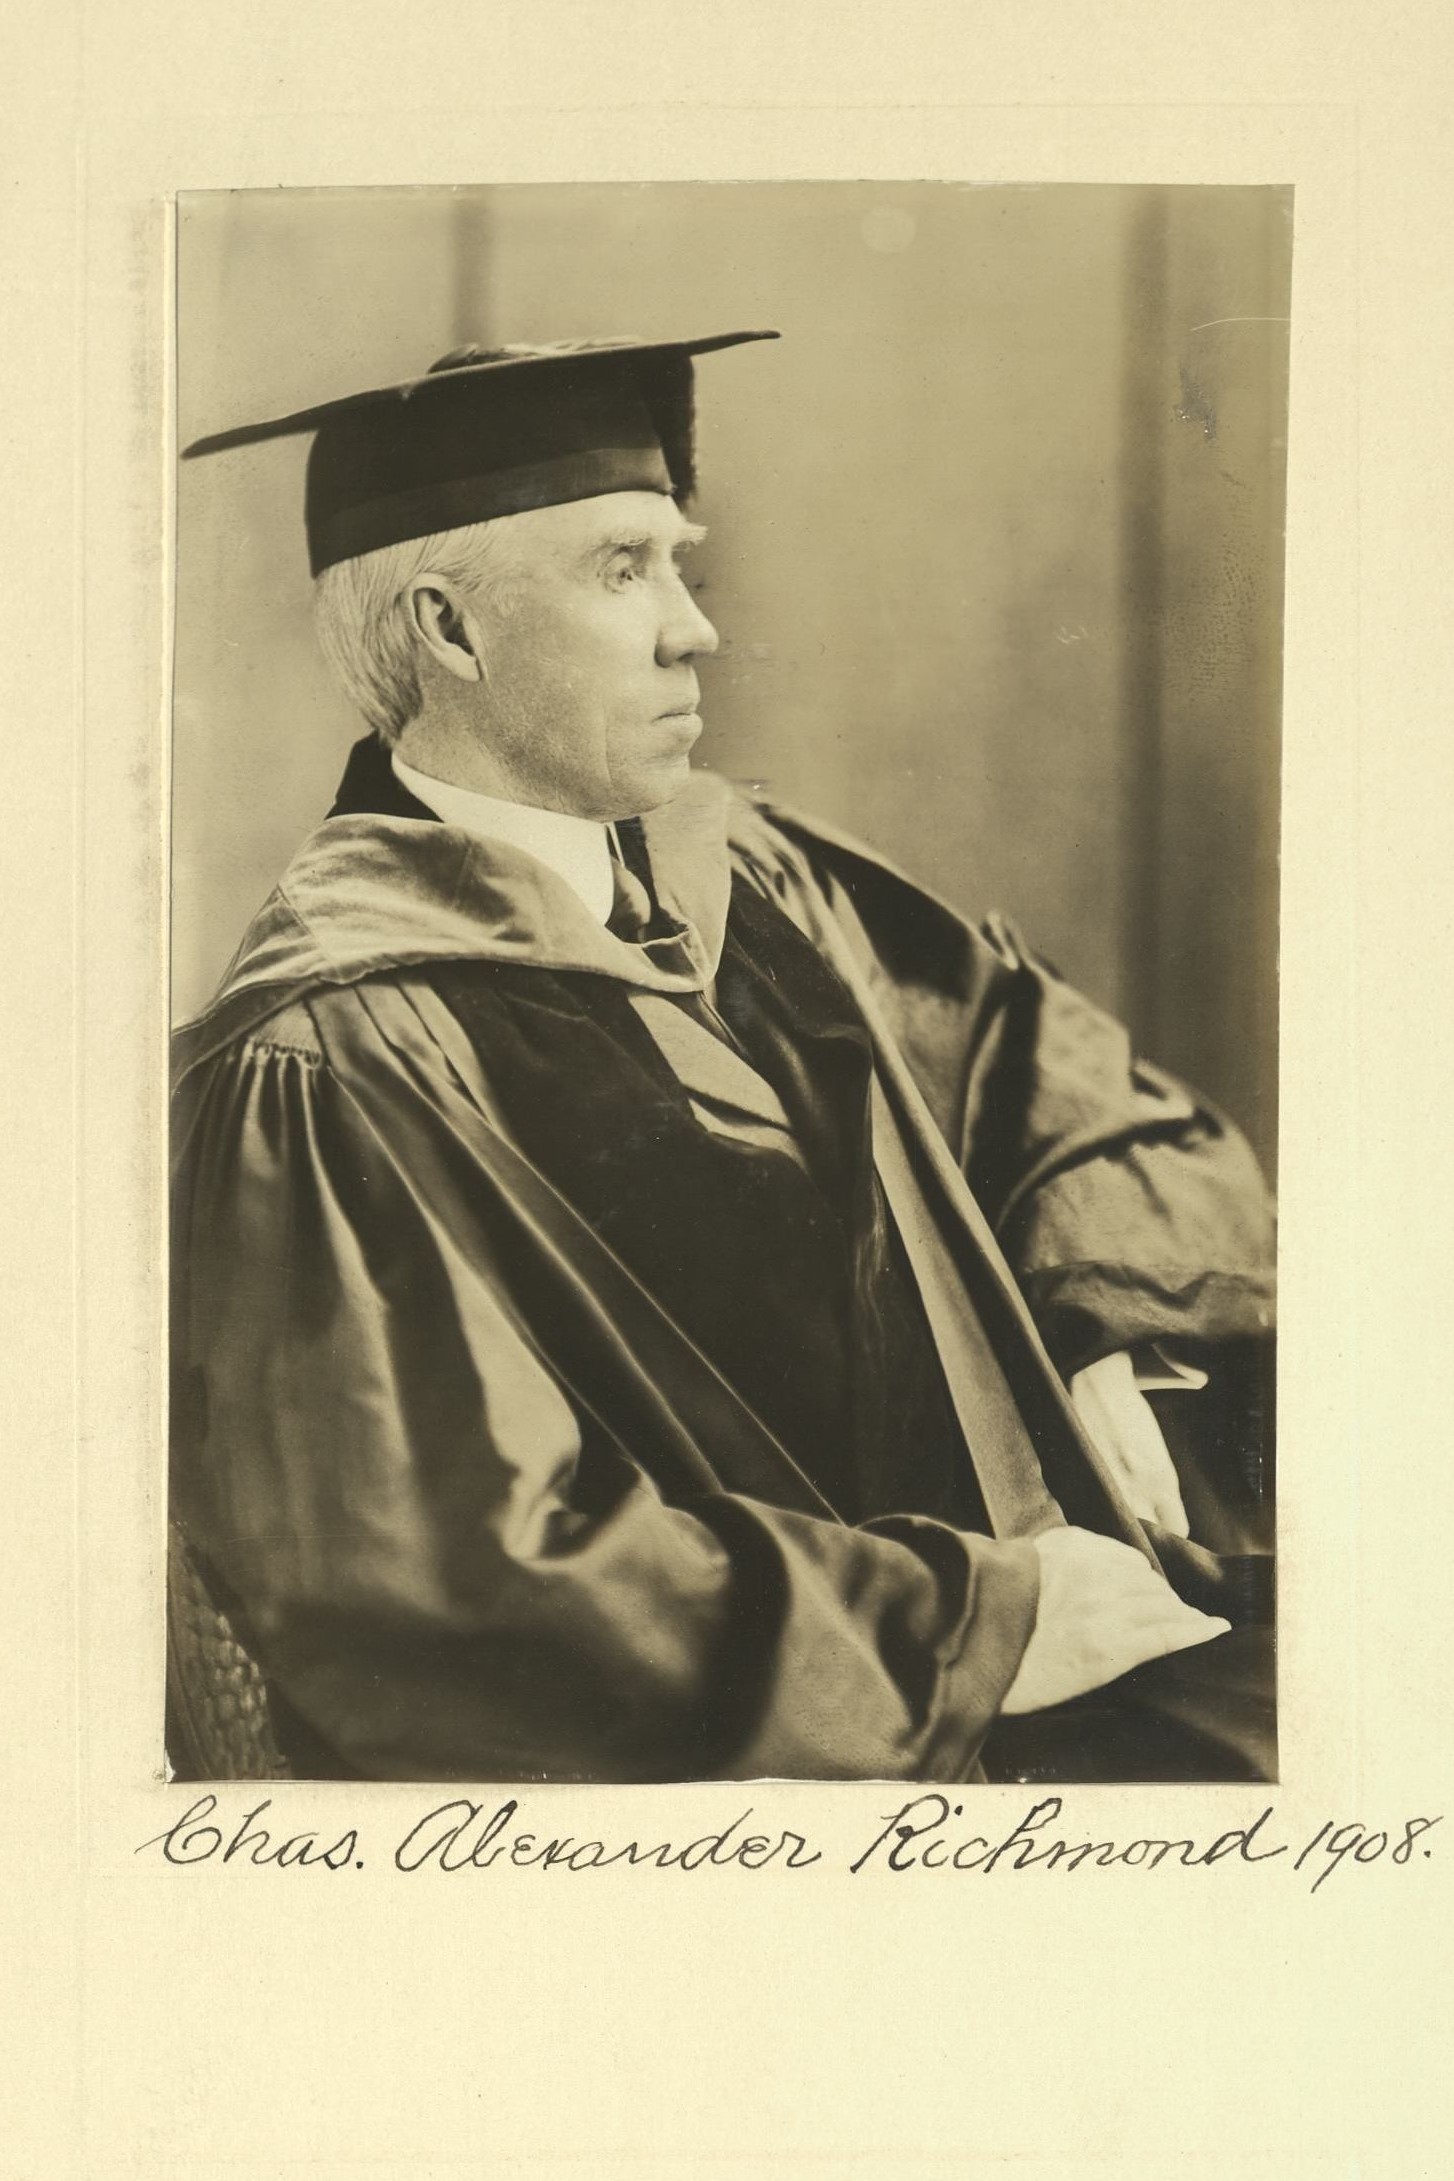 Member portrait of Charles A. Richmond